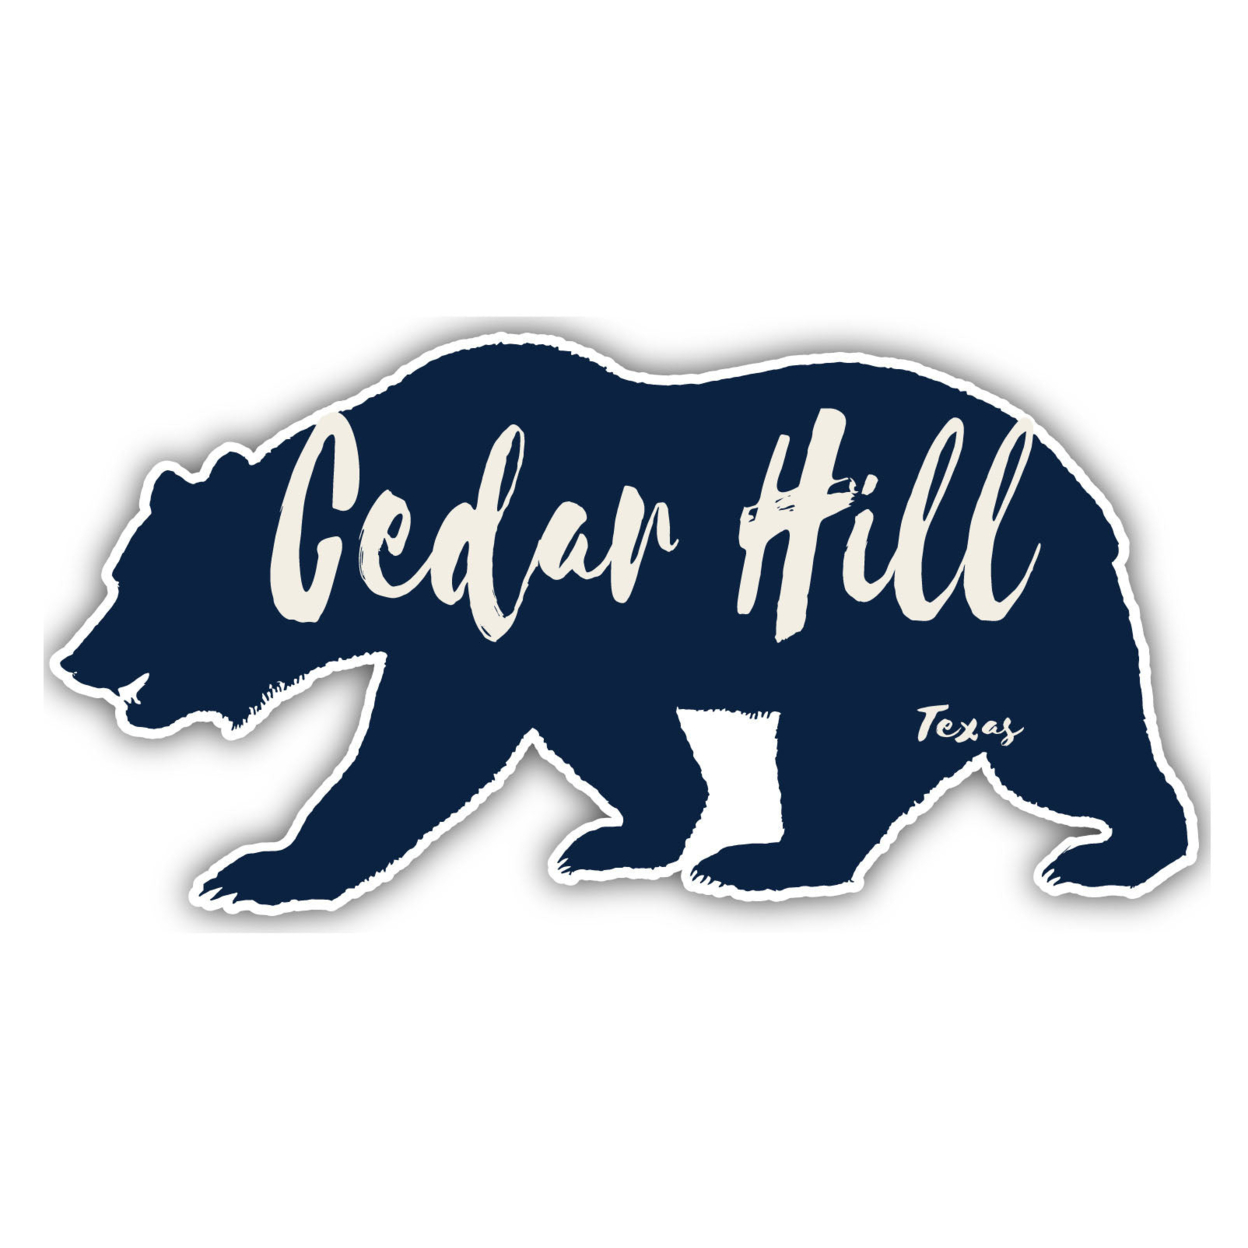 Cedar Hill Texas Souvenir Decorative Stickers (Choose Theme And Size) - Single Unit, 12-Inch, Bear